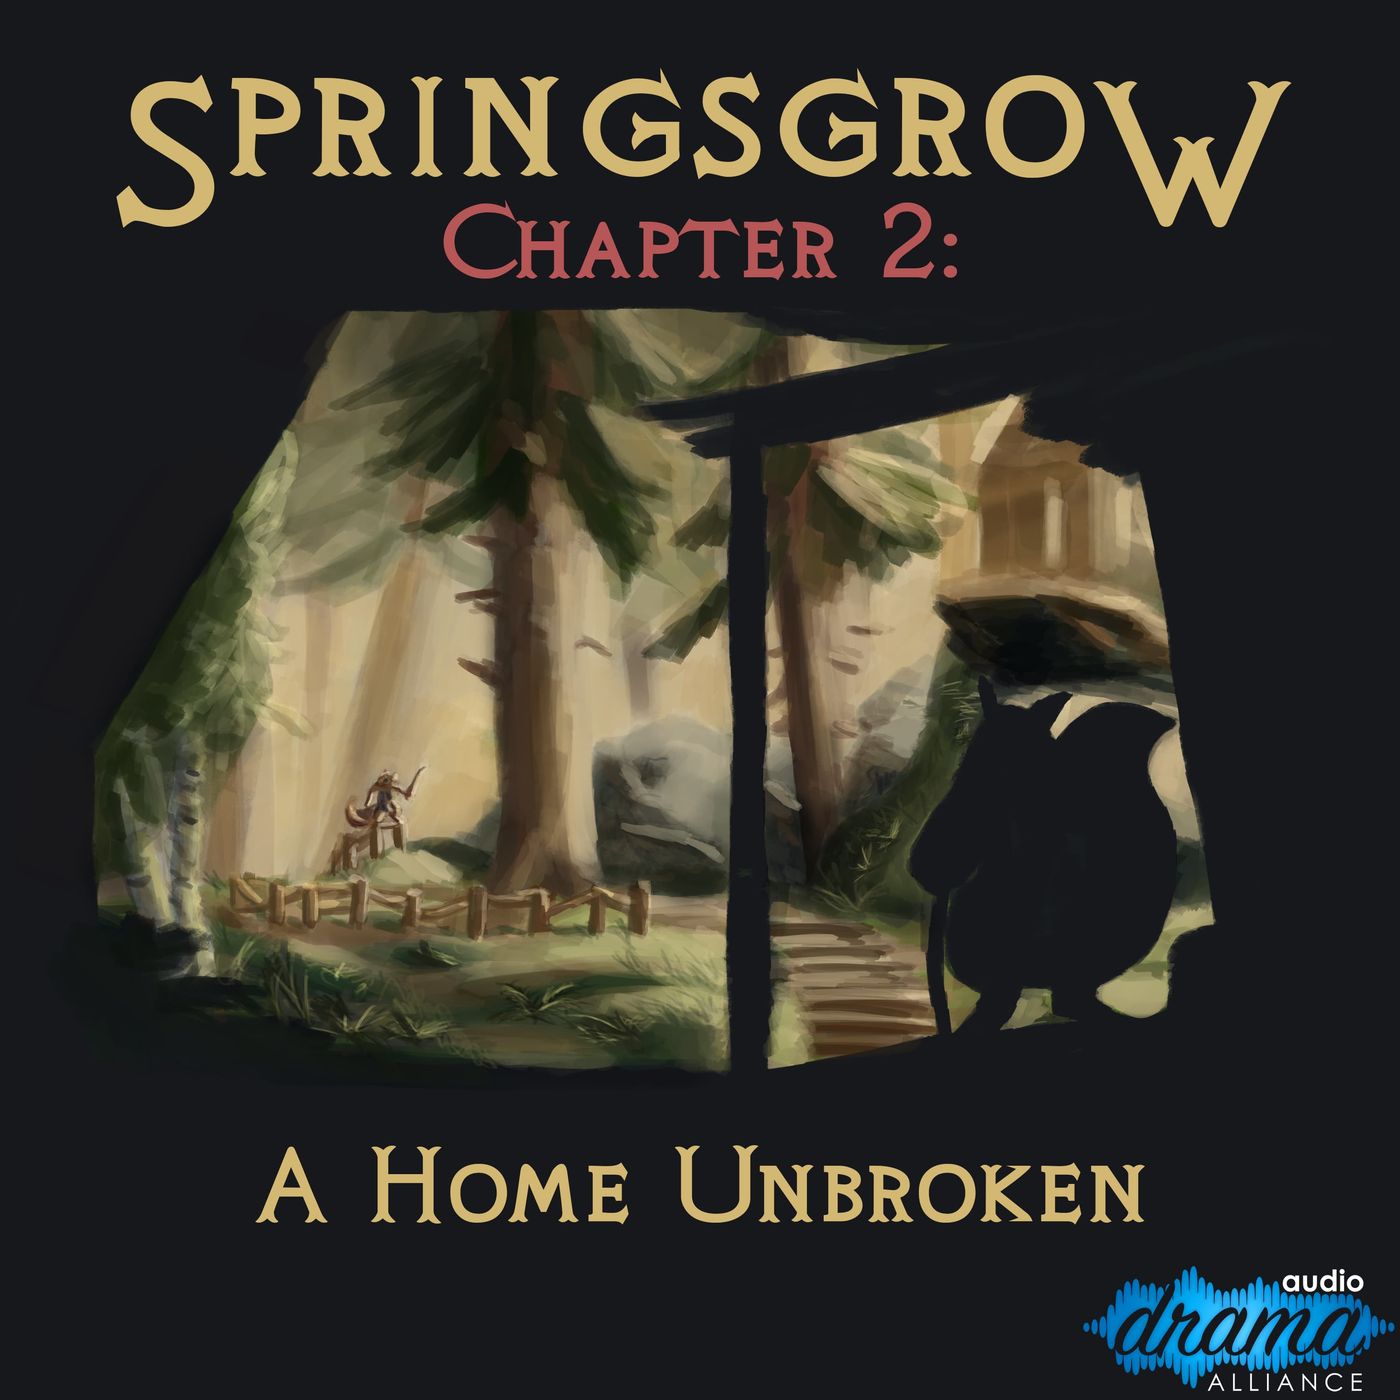 Springsgrow Chapter 2: A Home Unbroken